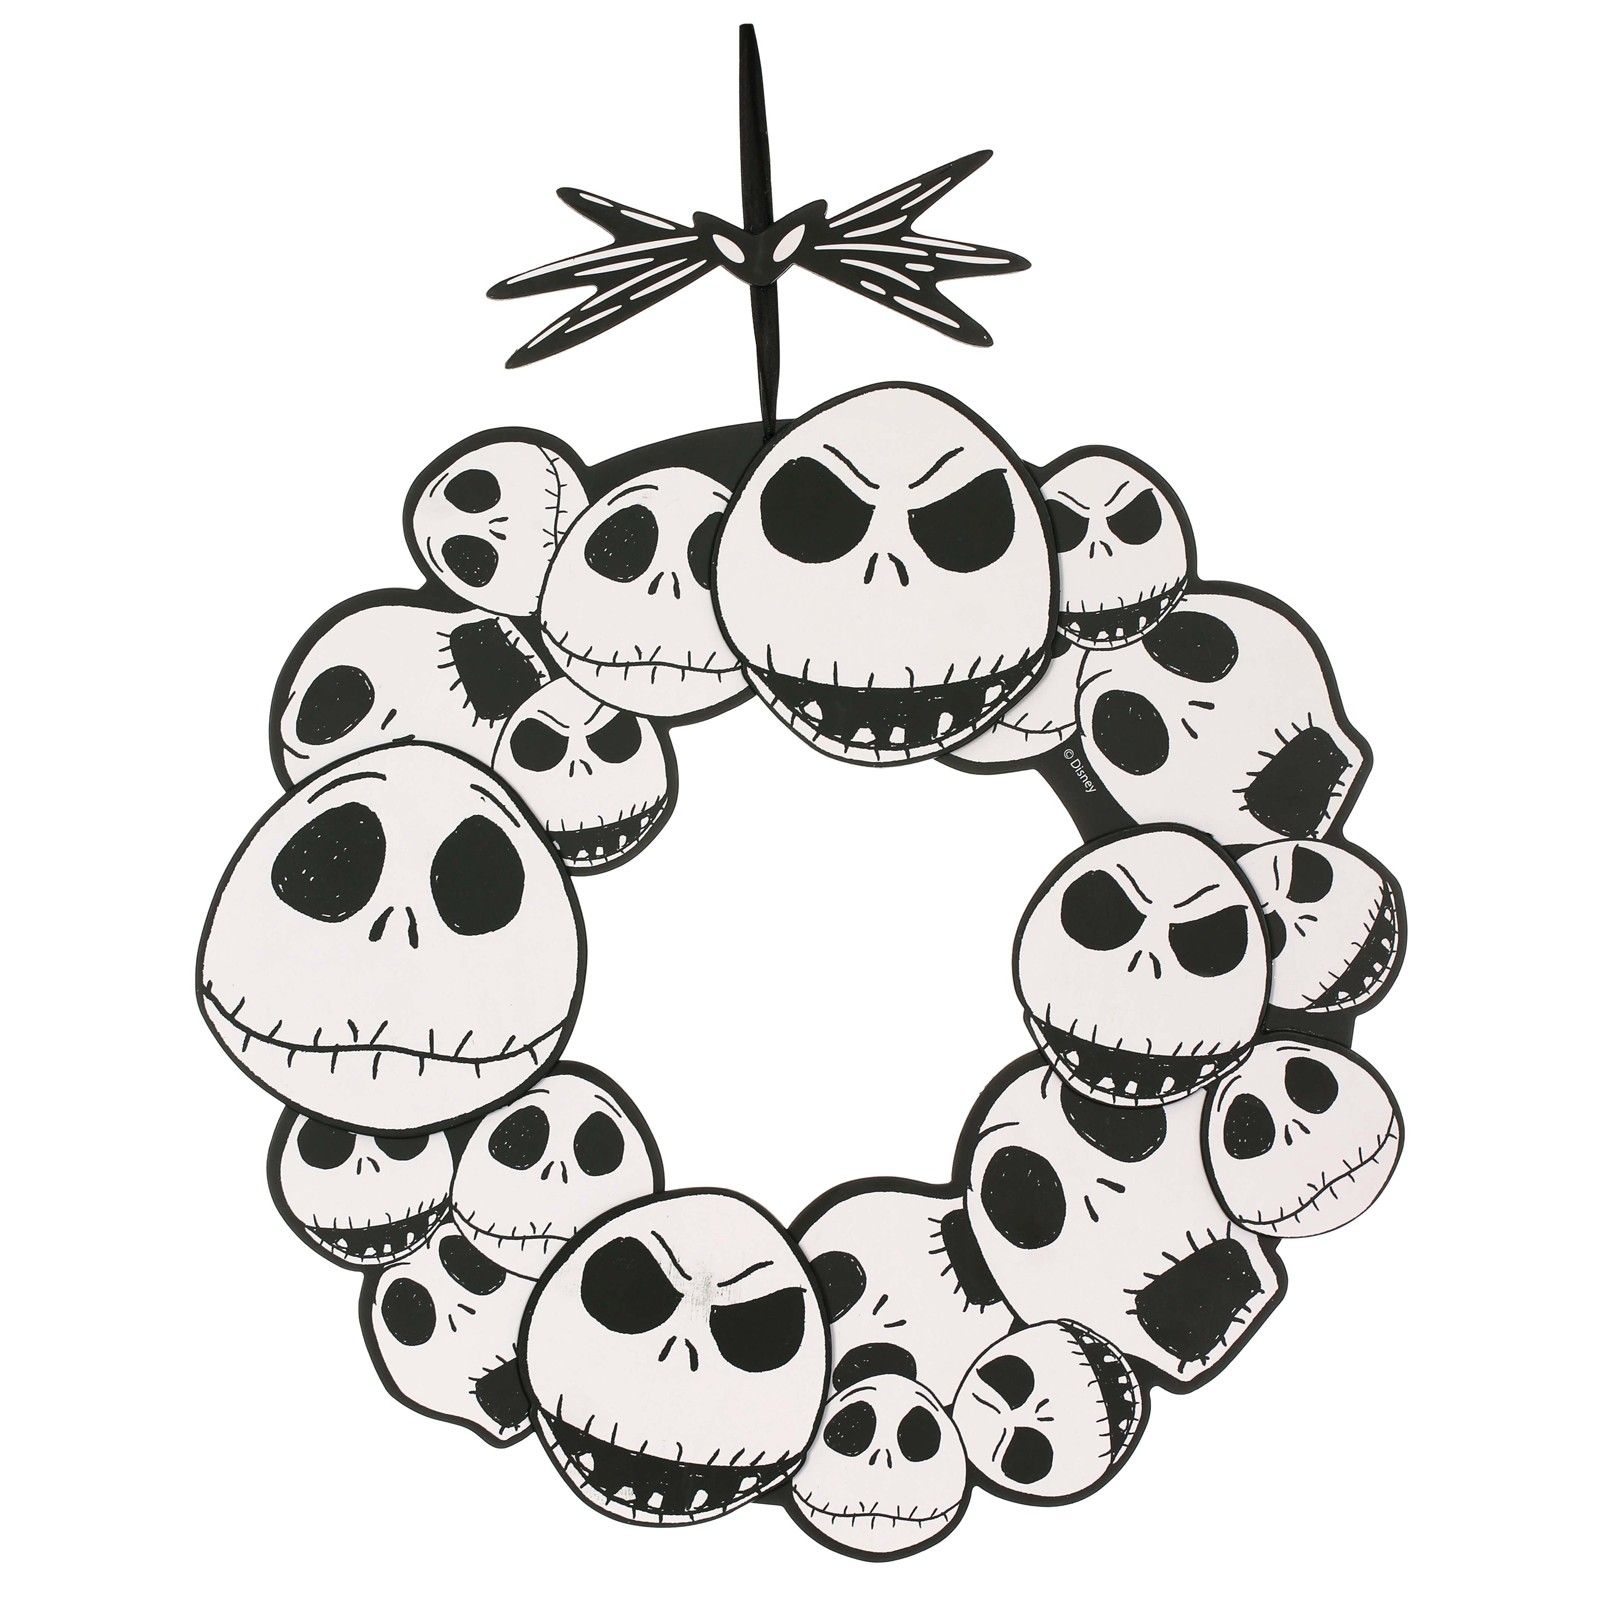 ‘The Nightmare Before Christmas’ Jack Skellington Wreath